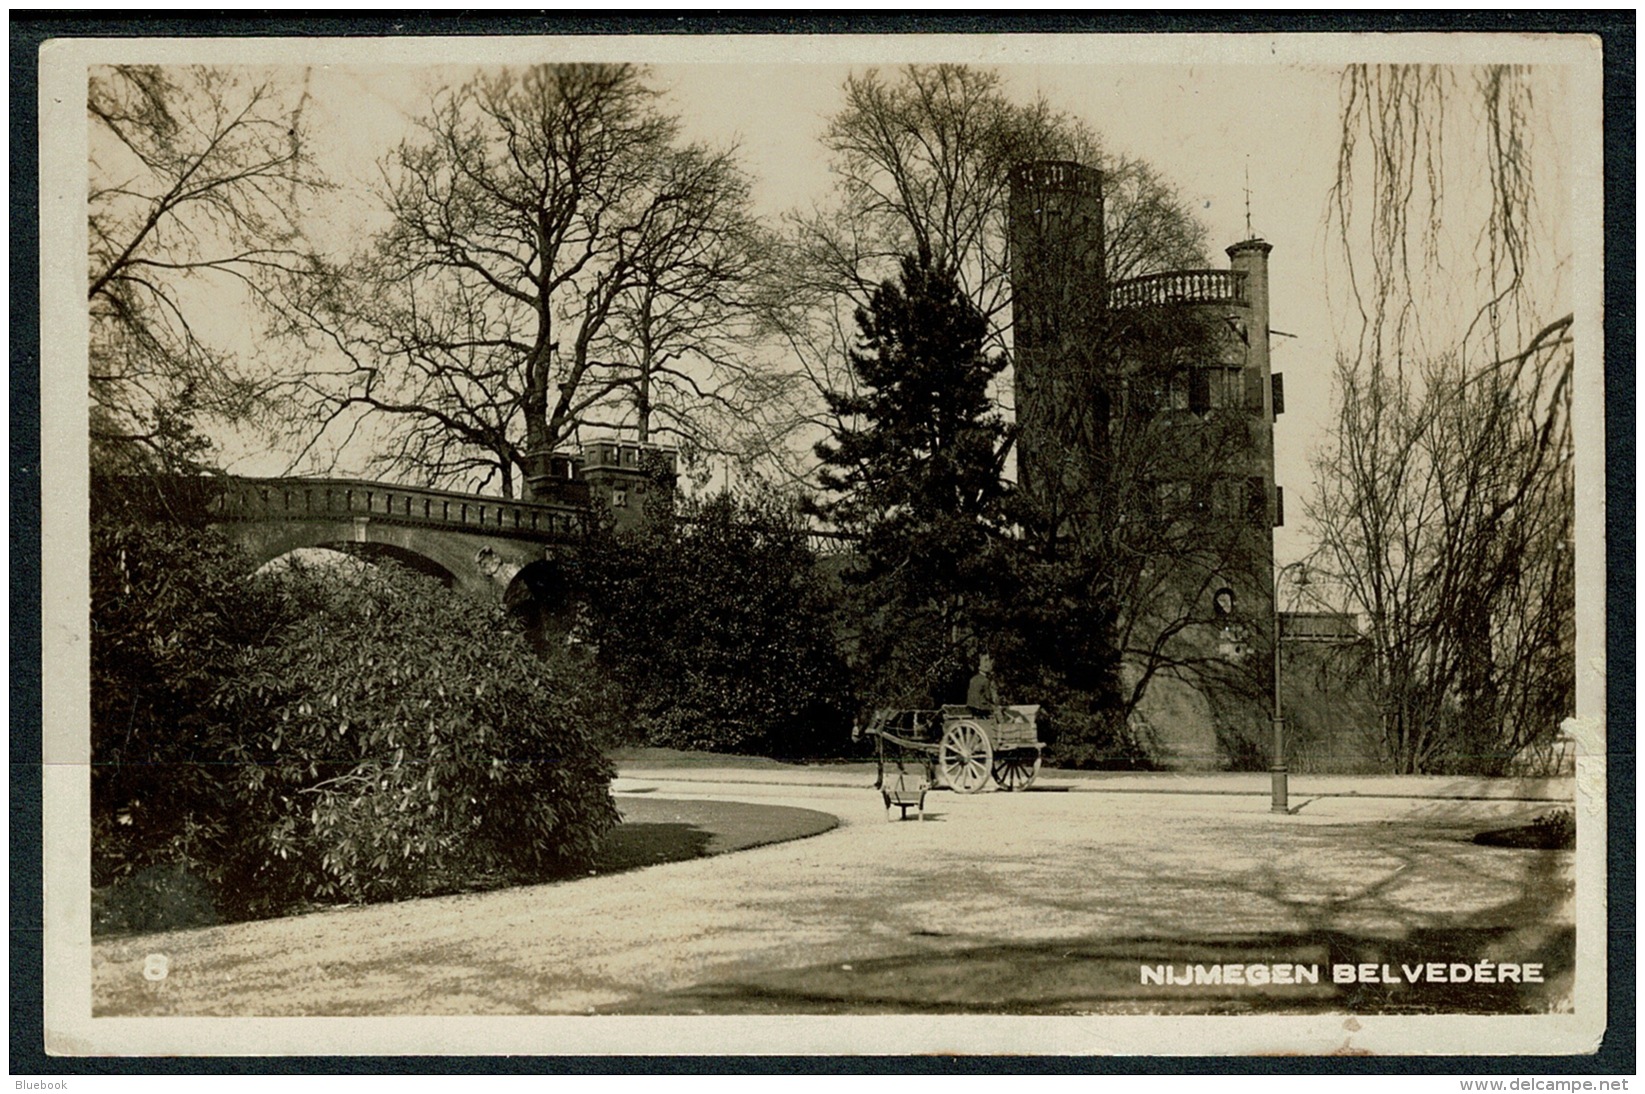 RB 1224 - 1931 Real Photo Postcard - Nijmegen Belvedere Netherlands 1 1/2c Rate - Nijmegen